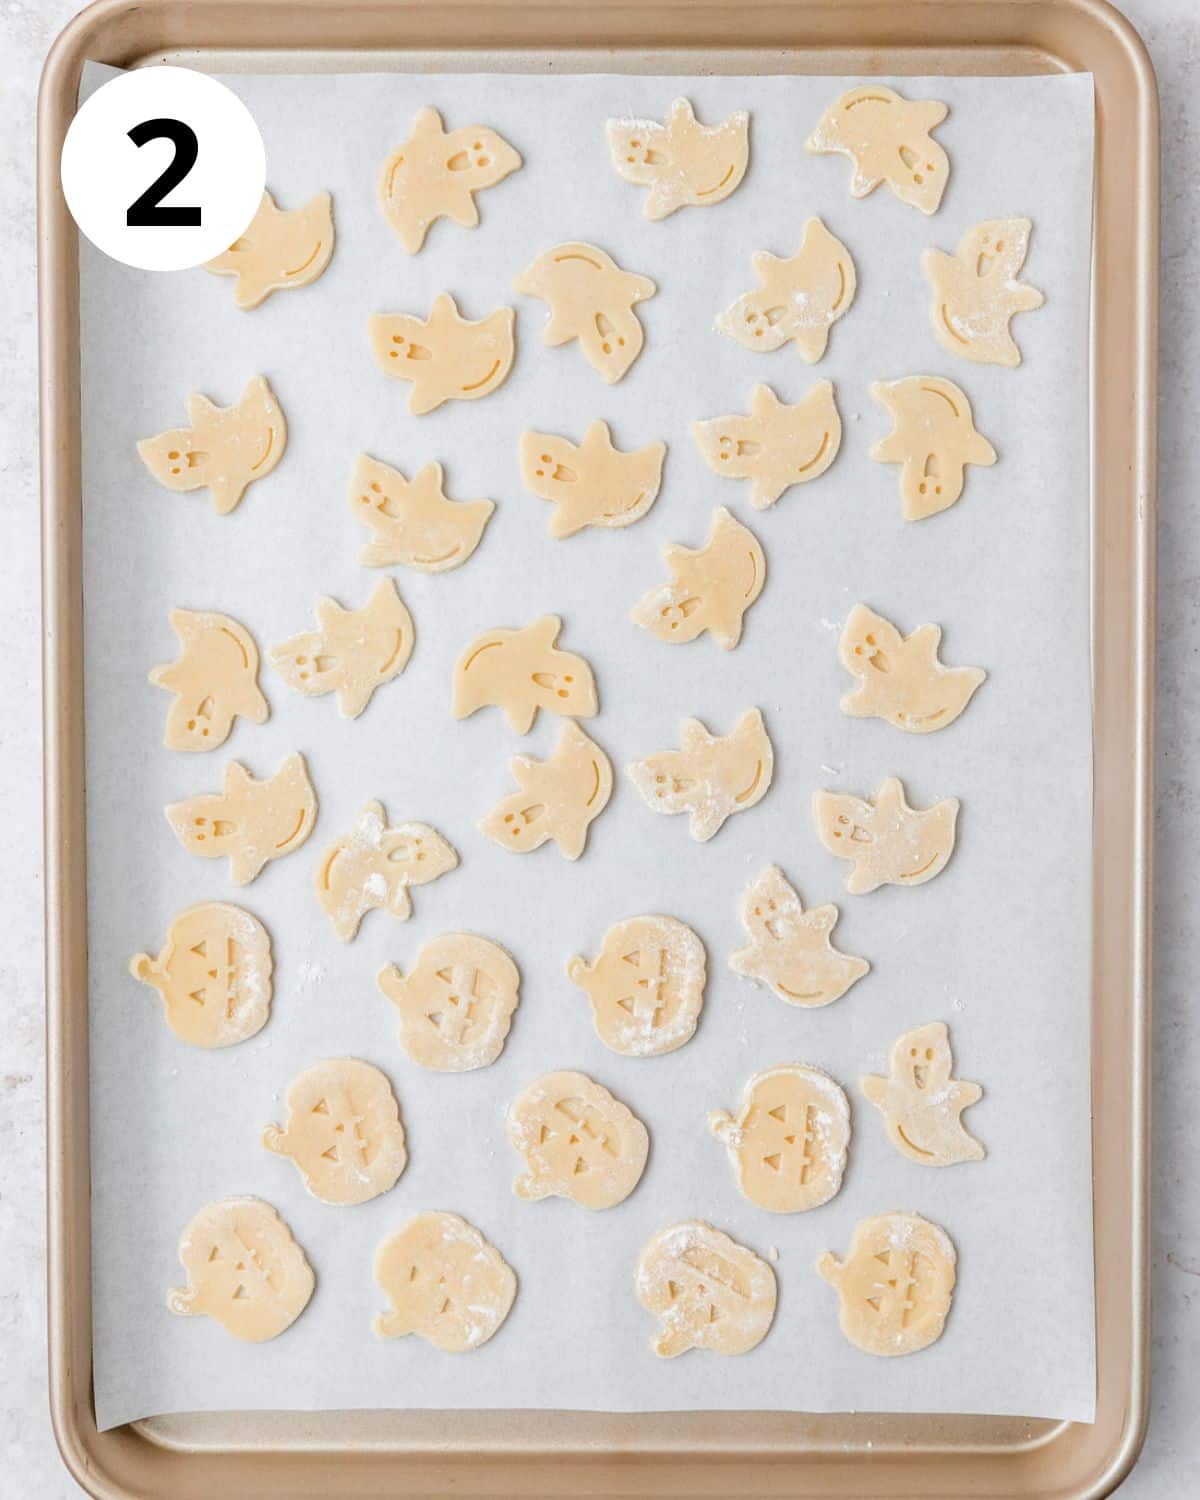 arranging pie crust cutouts on baking sheet.